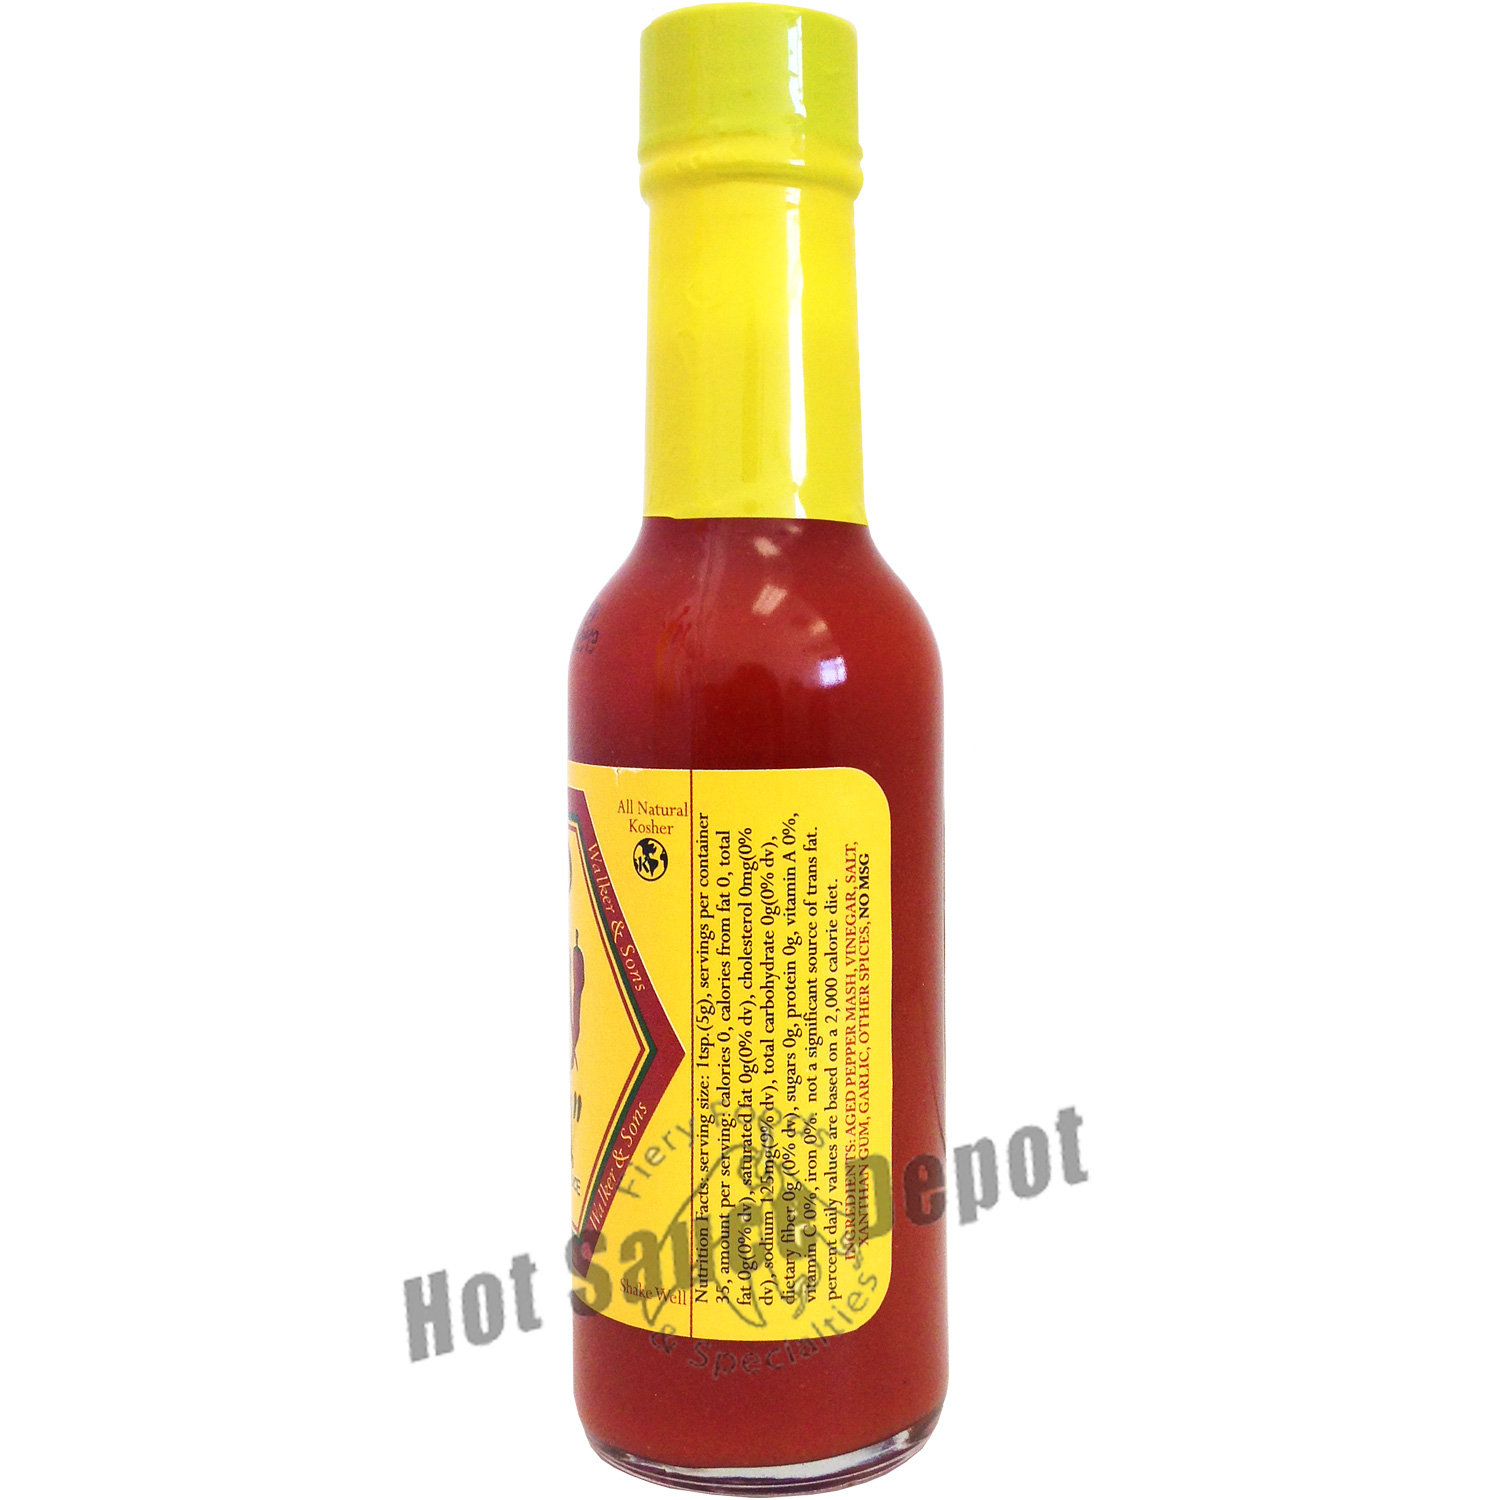 https://hotsaucedepot.com/images/product/Slap-Ya-Mama-Cajun-Pepper-Sauce-back.jpg